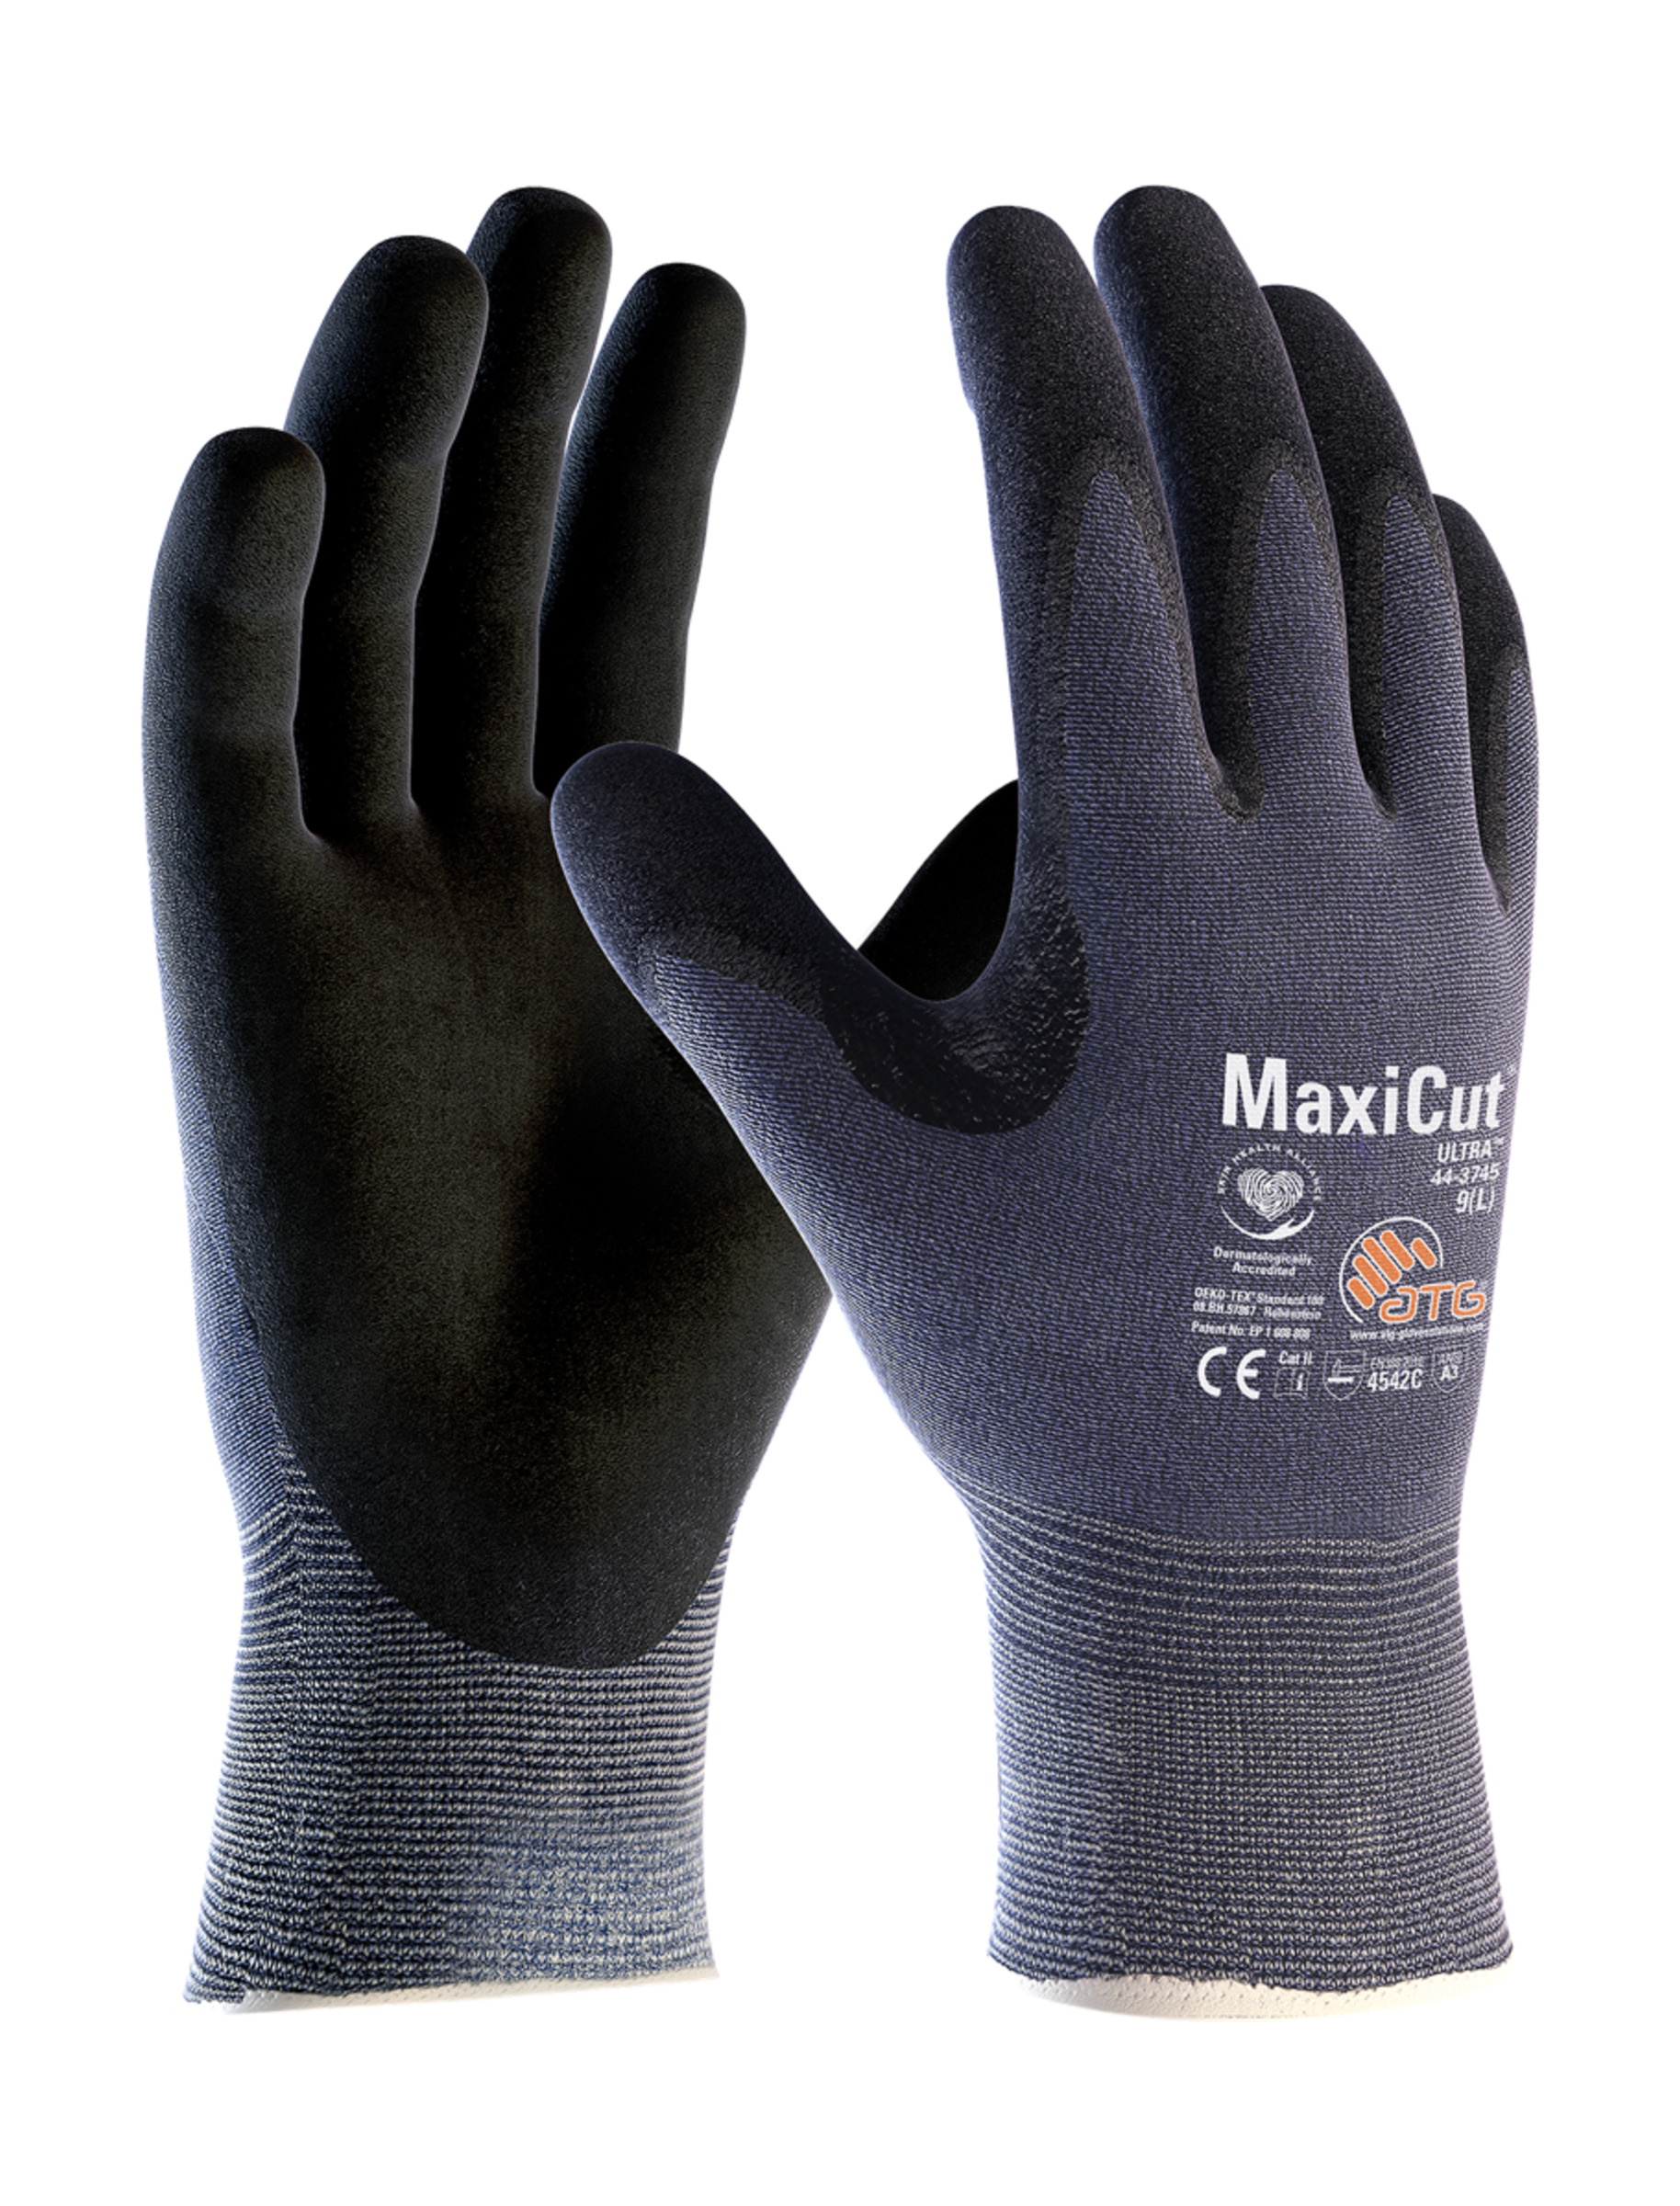 ATG MaxiCut Ultra 5C Gloves